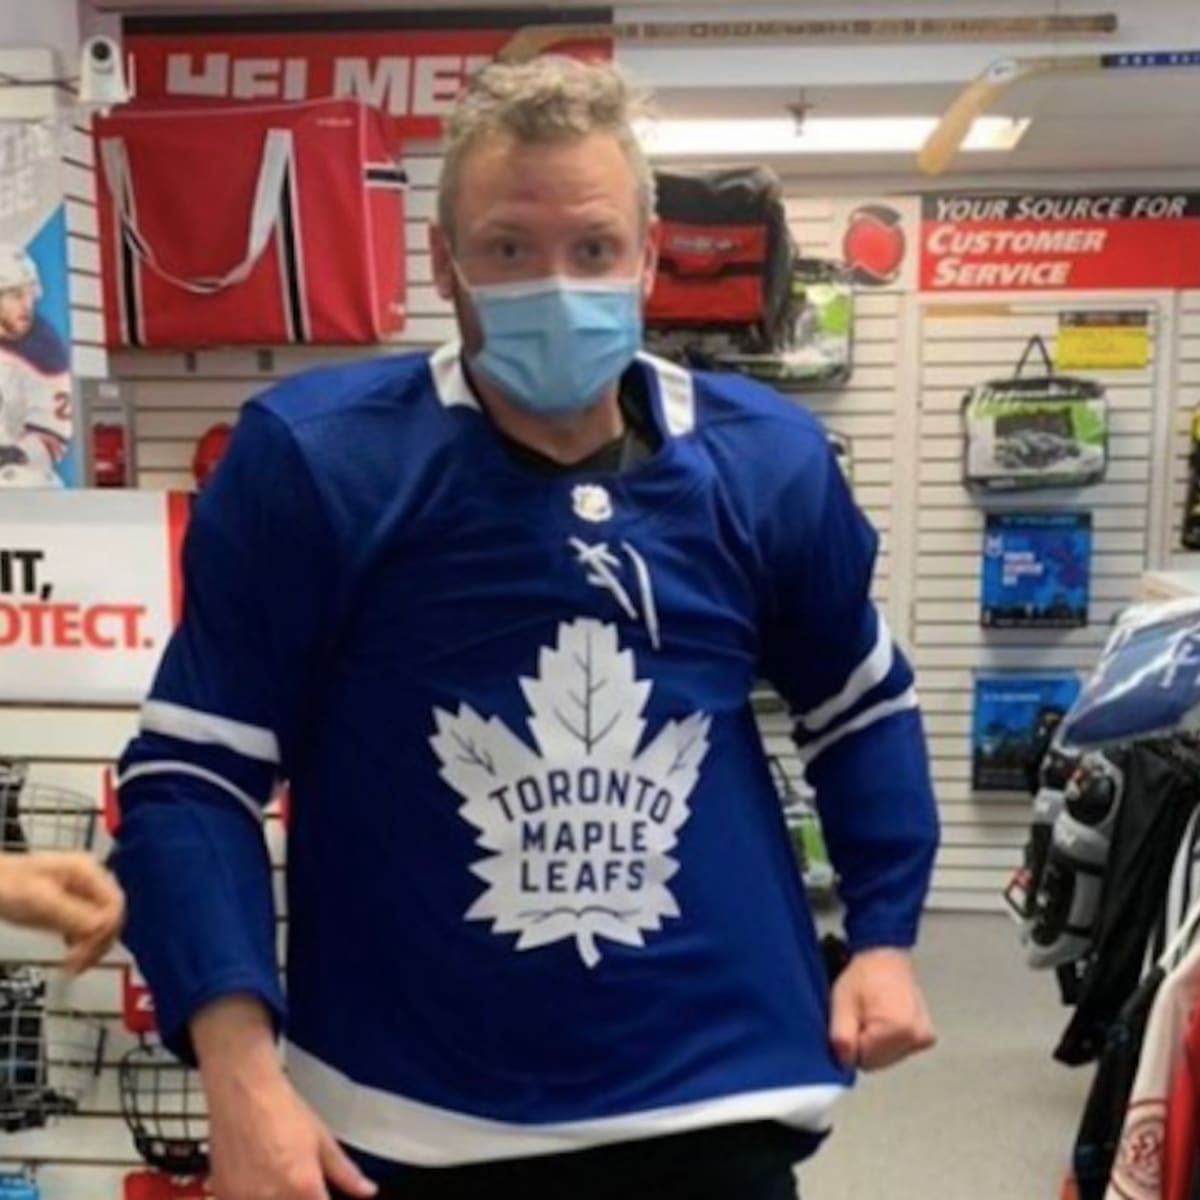 Man behind mask at Toronto hockey store revealed to be Josh